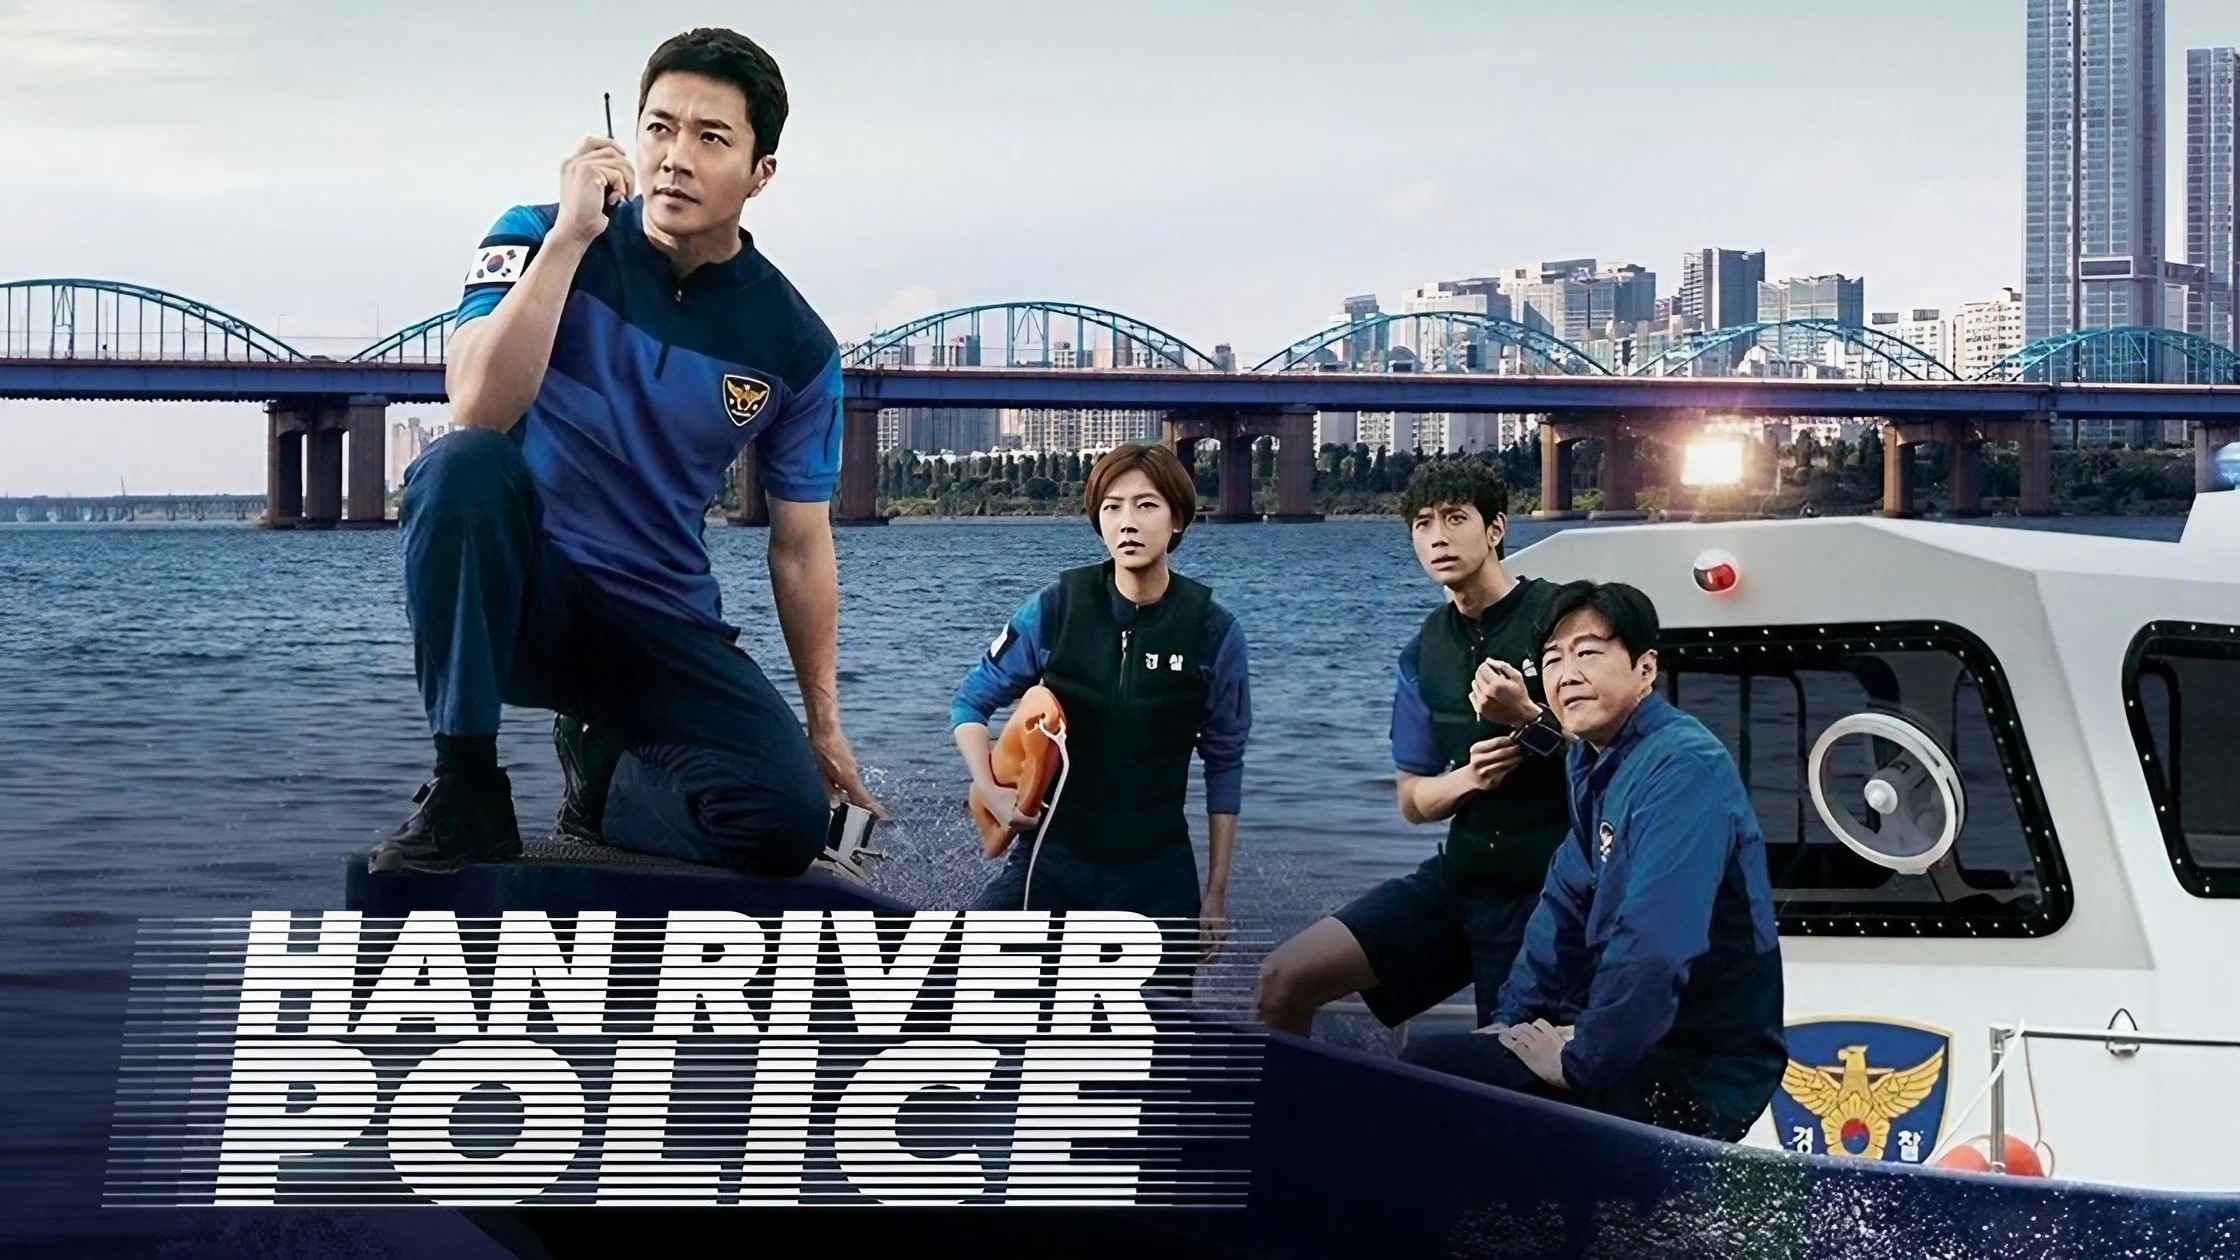 Han River Police season 2 release date